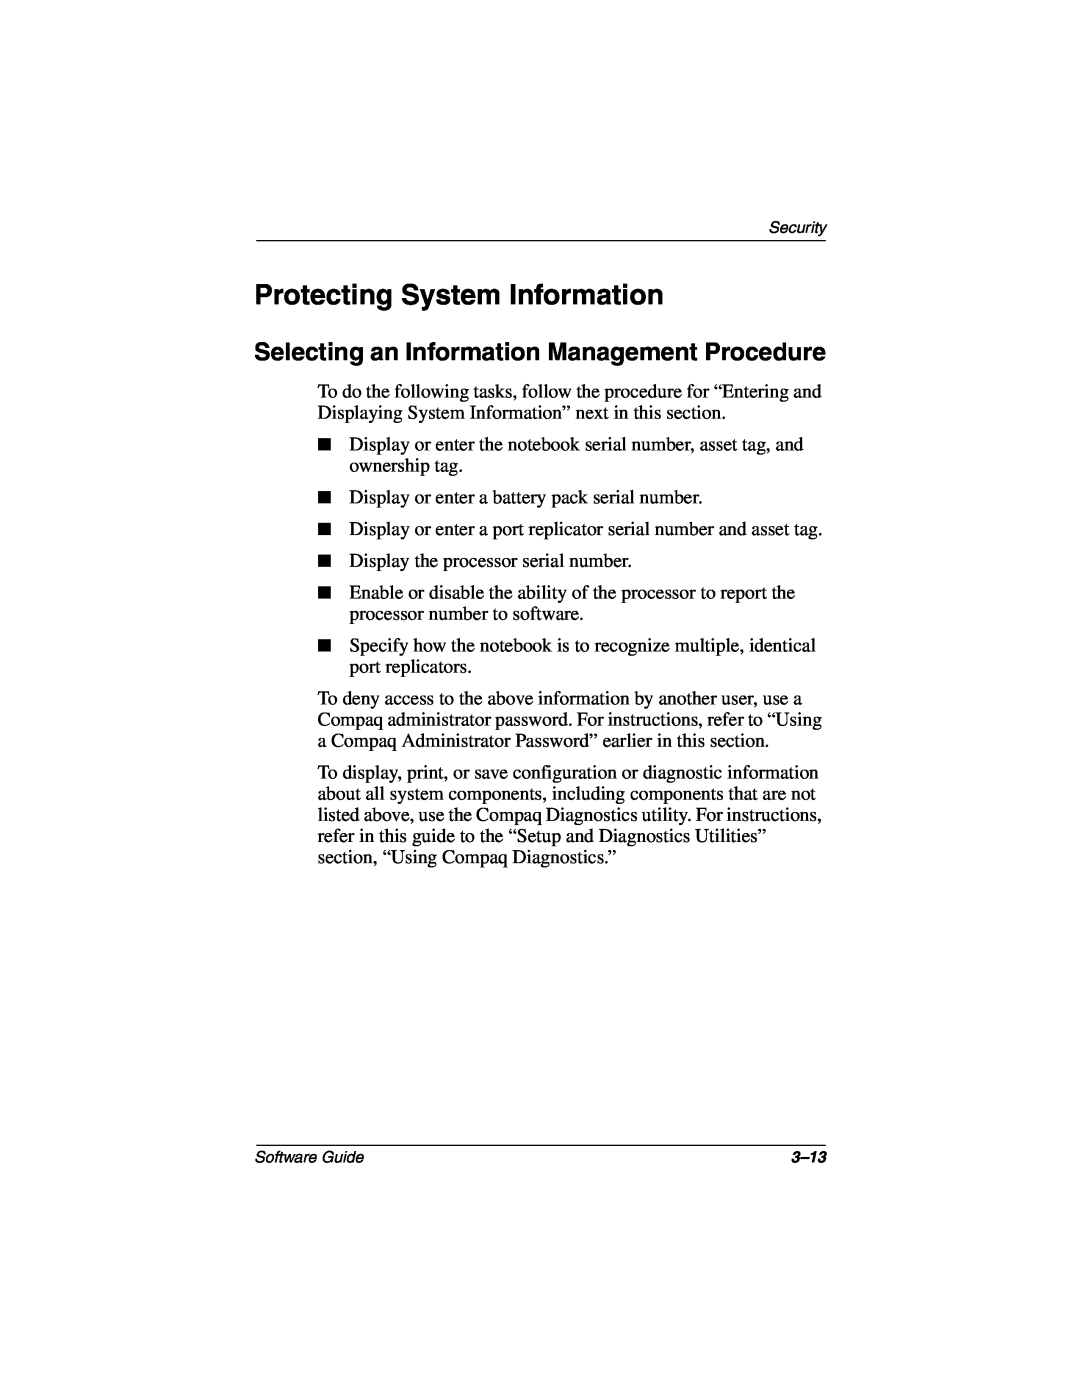 HP 2838TC, 2899AP, 2897AP, 2896AP, 2898AP, 2892AP Protecting System Information, Selecting an Information Management Procedure 